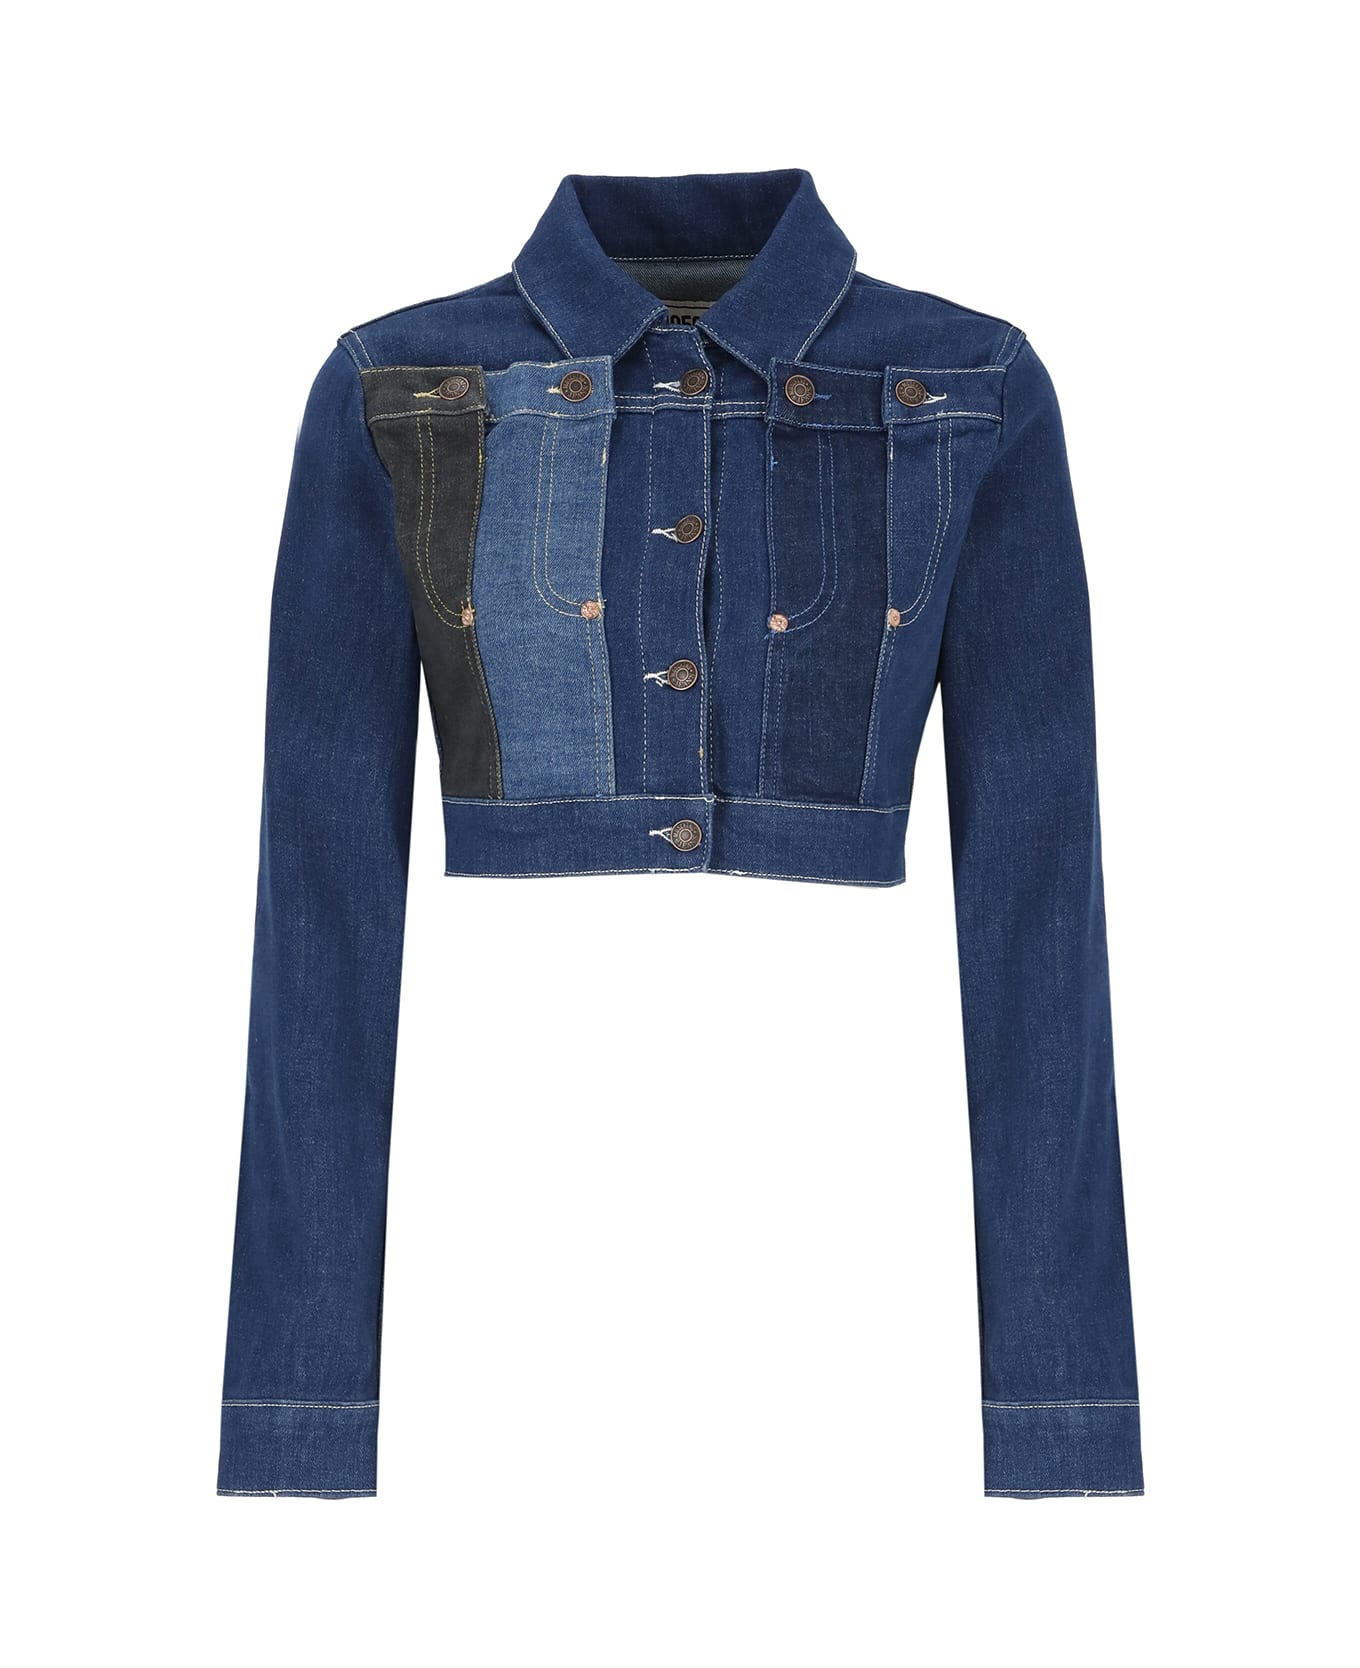 M05CH1N0 Jeans Cotton Denim Jacket - Blue ジャケット